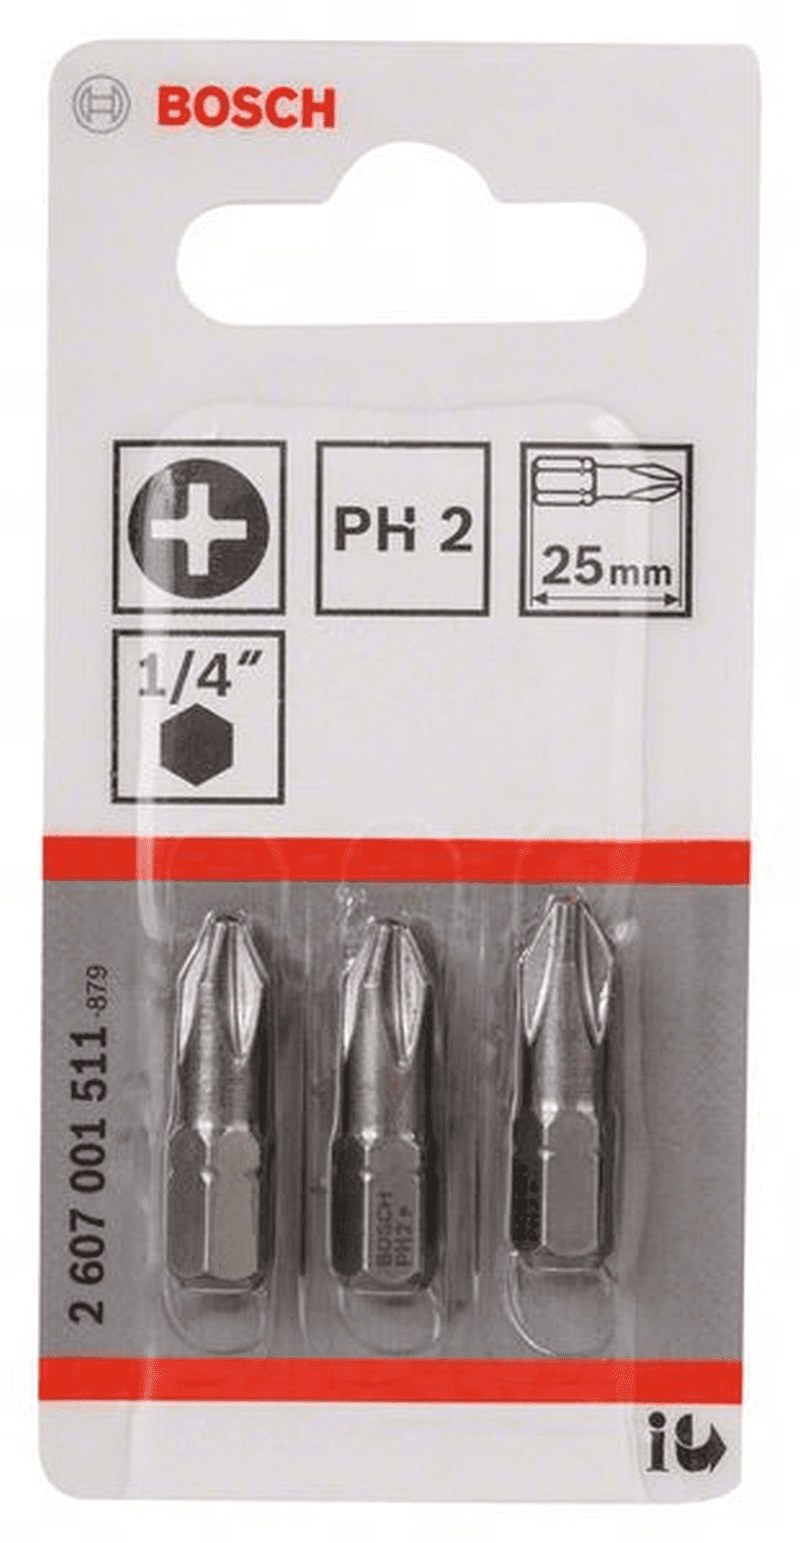 Bosch Schrauberbit Extra-Hart PH 2 3er-Pack 25 mm 